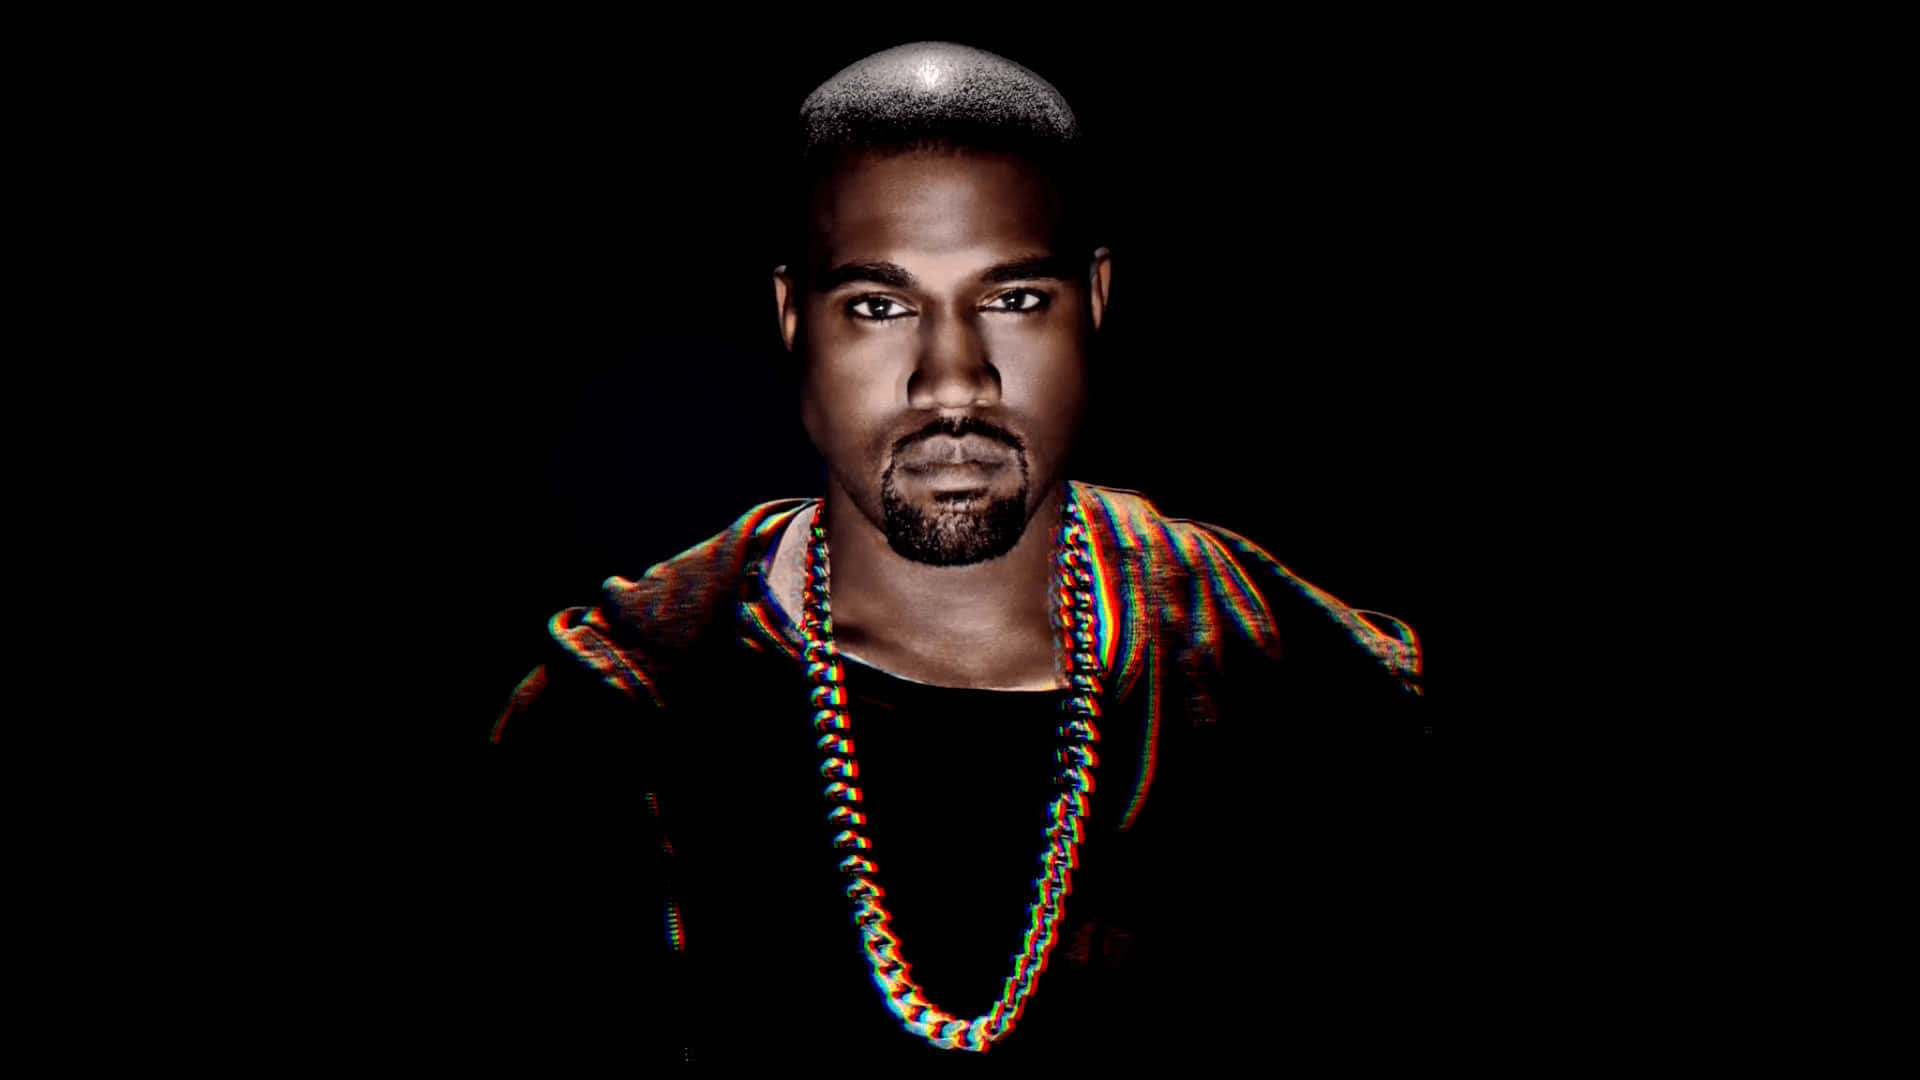 Sfondodi Kanye West